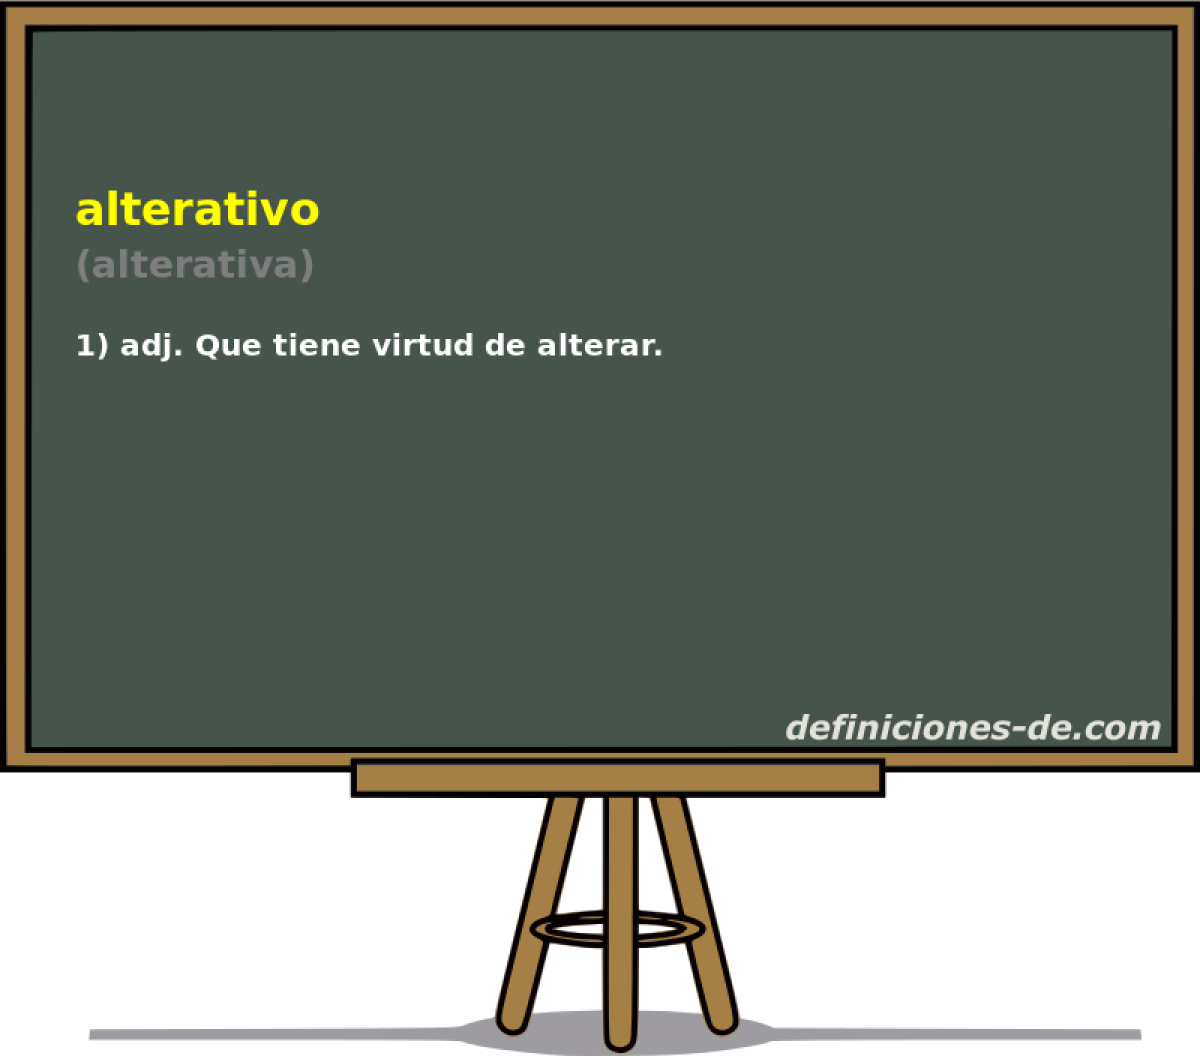 alterativo (alterativa)